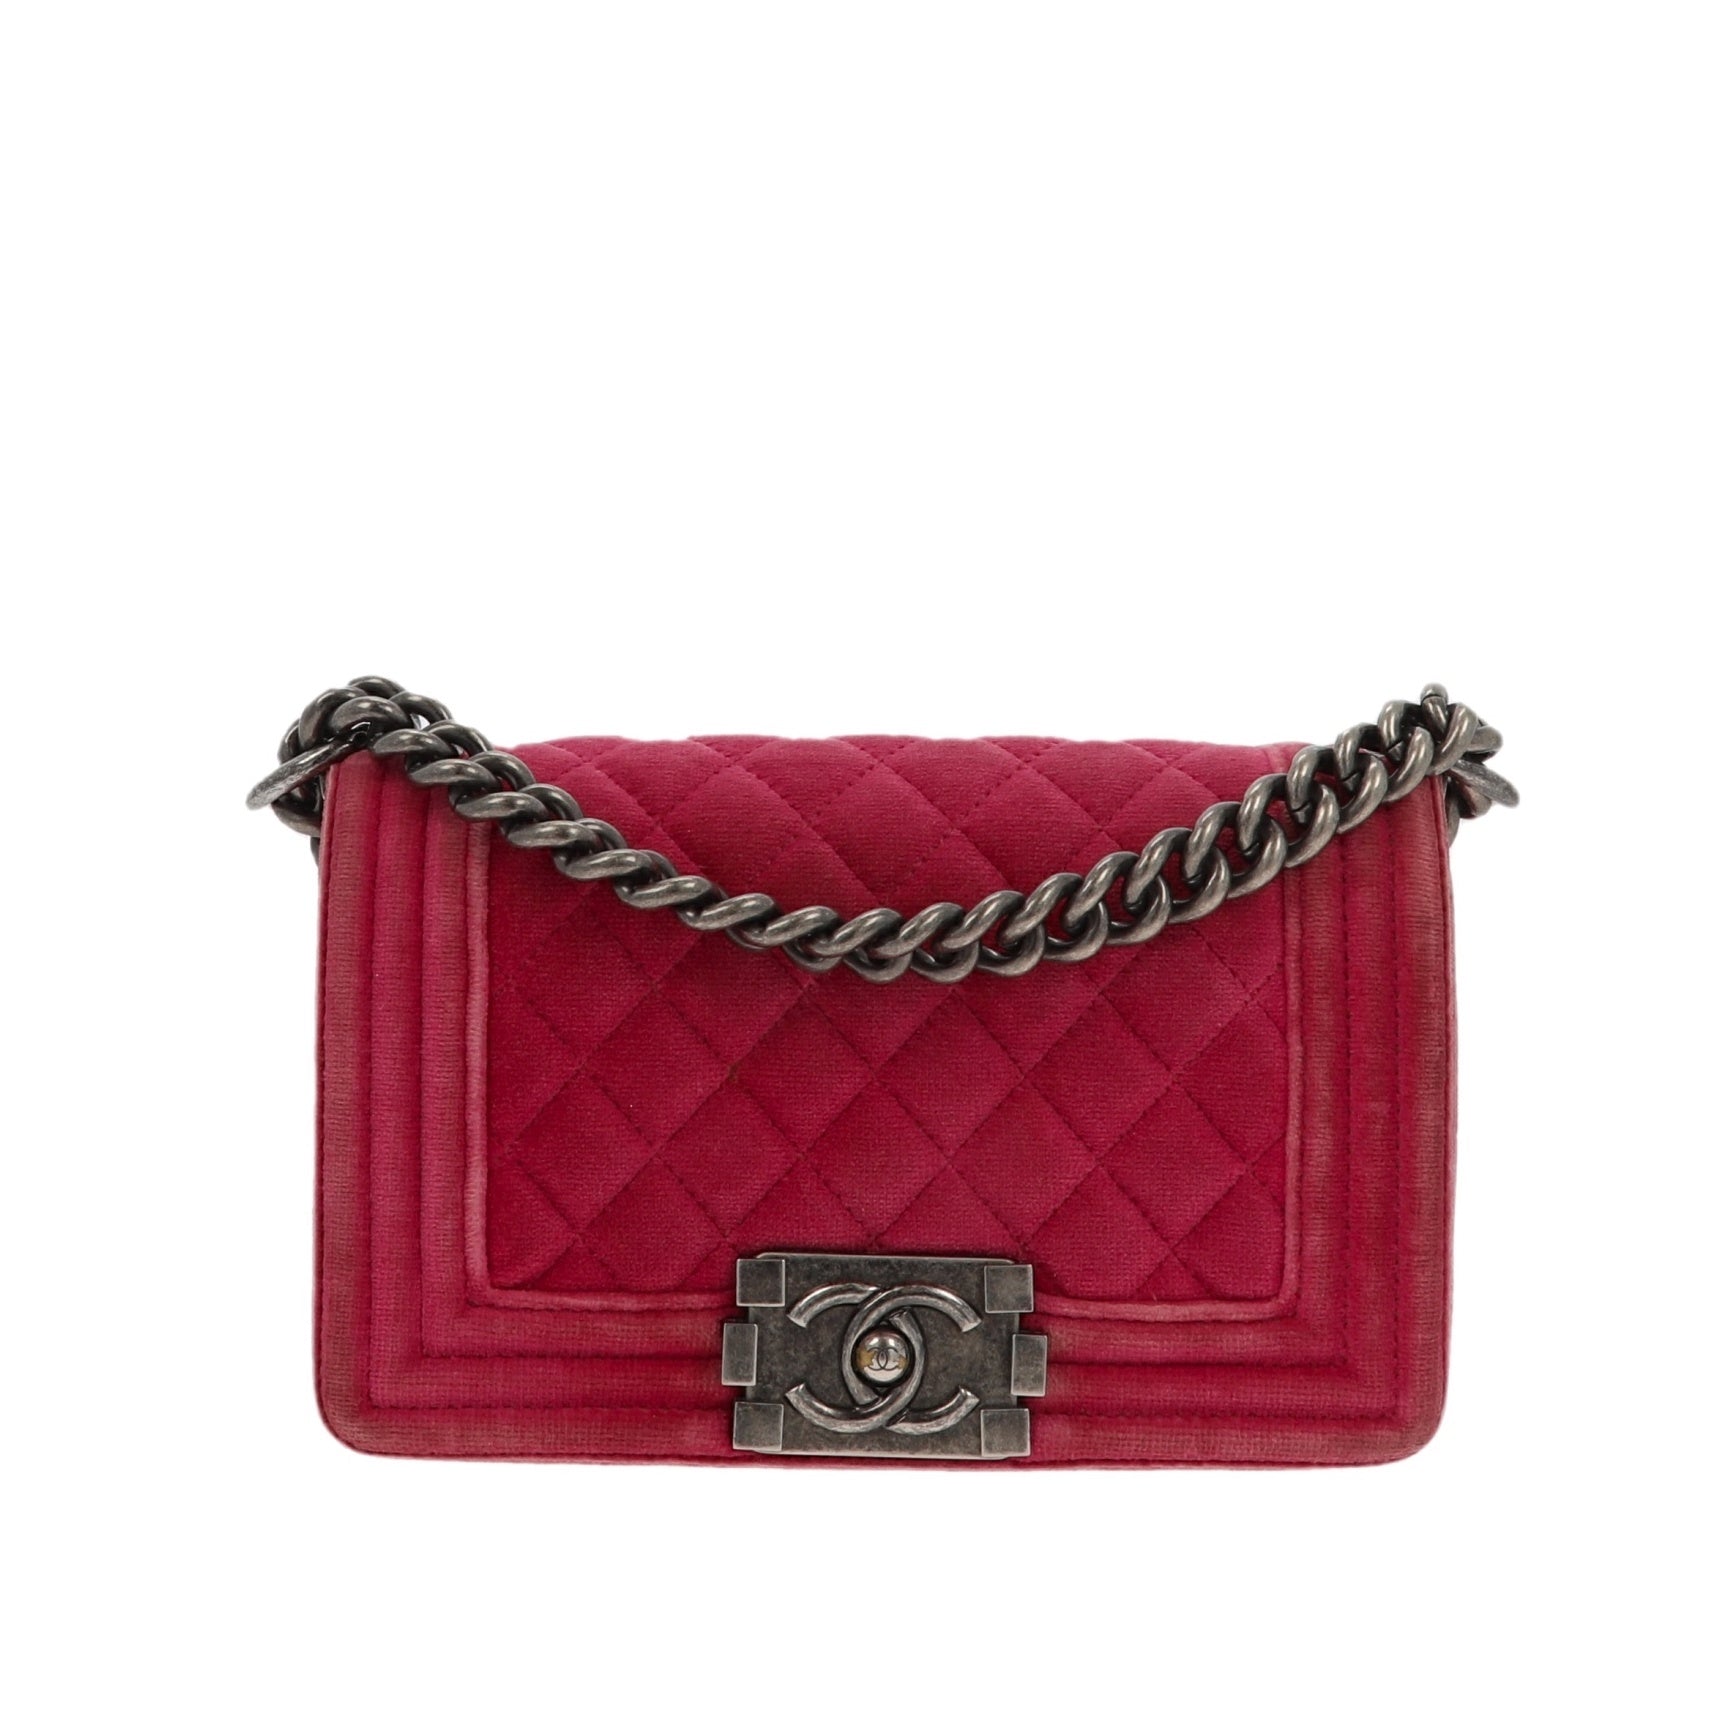 Chanel Boy Bag (Raspberry/Pink)